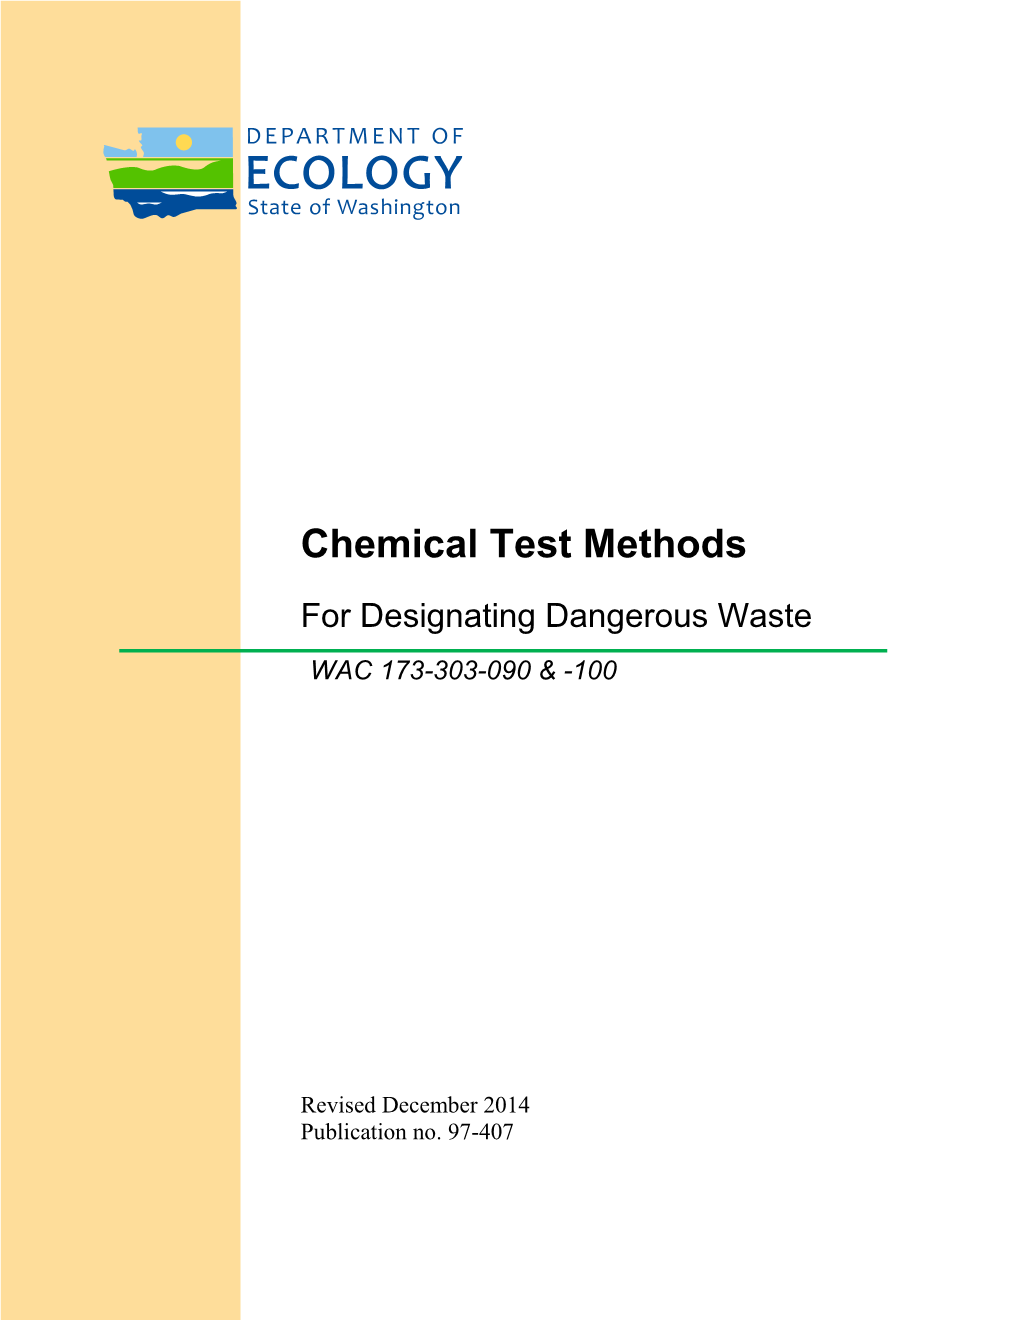 Chemical Test Methods for Designating Dangerous Waste